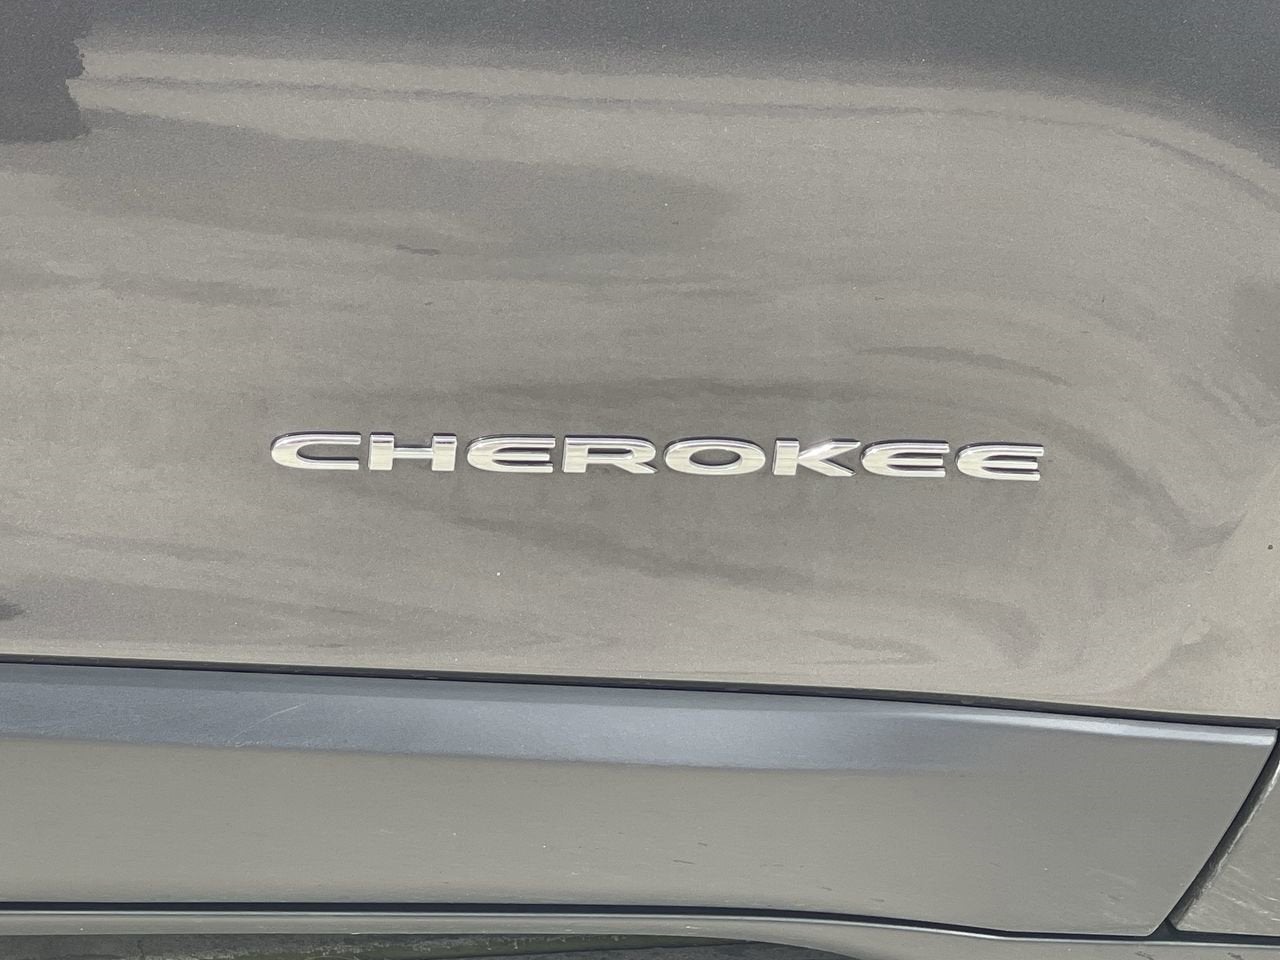 2022 Jeep Cherokee Latitude Lux FWD